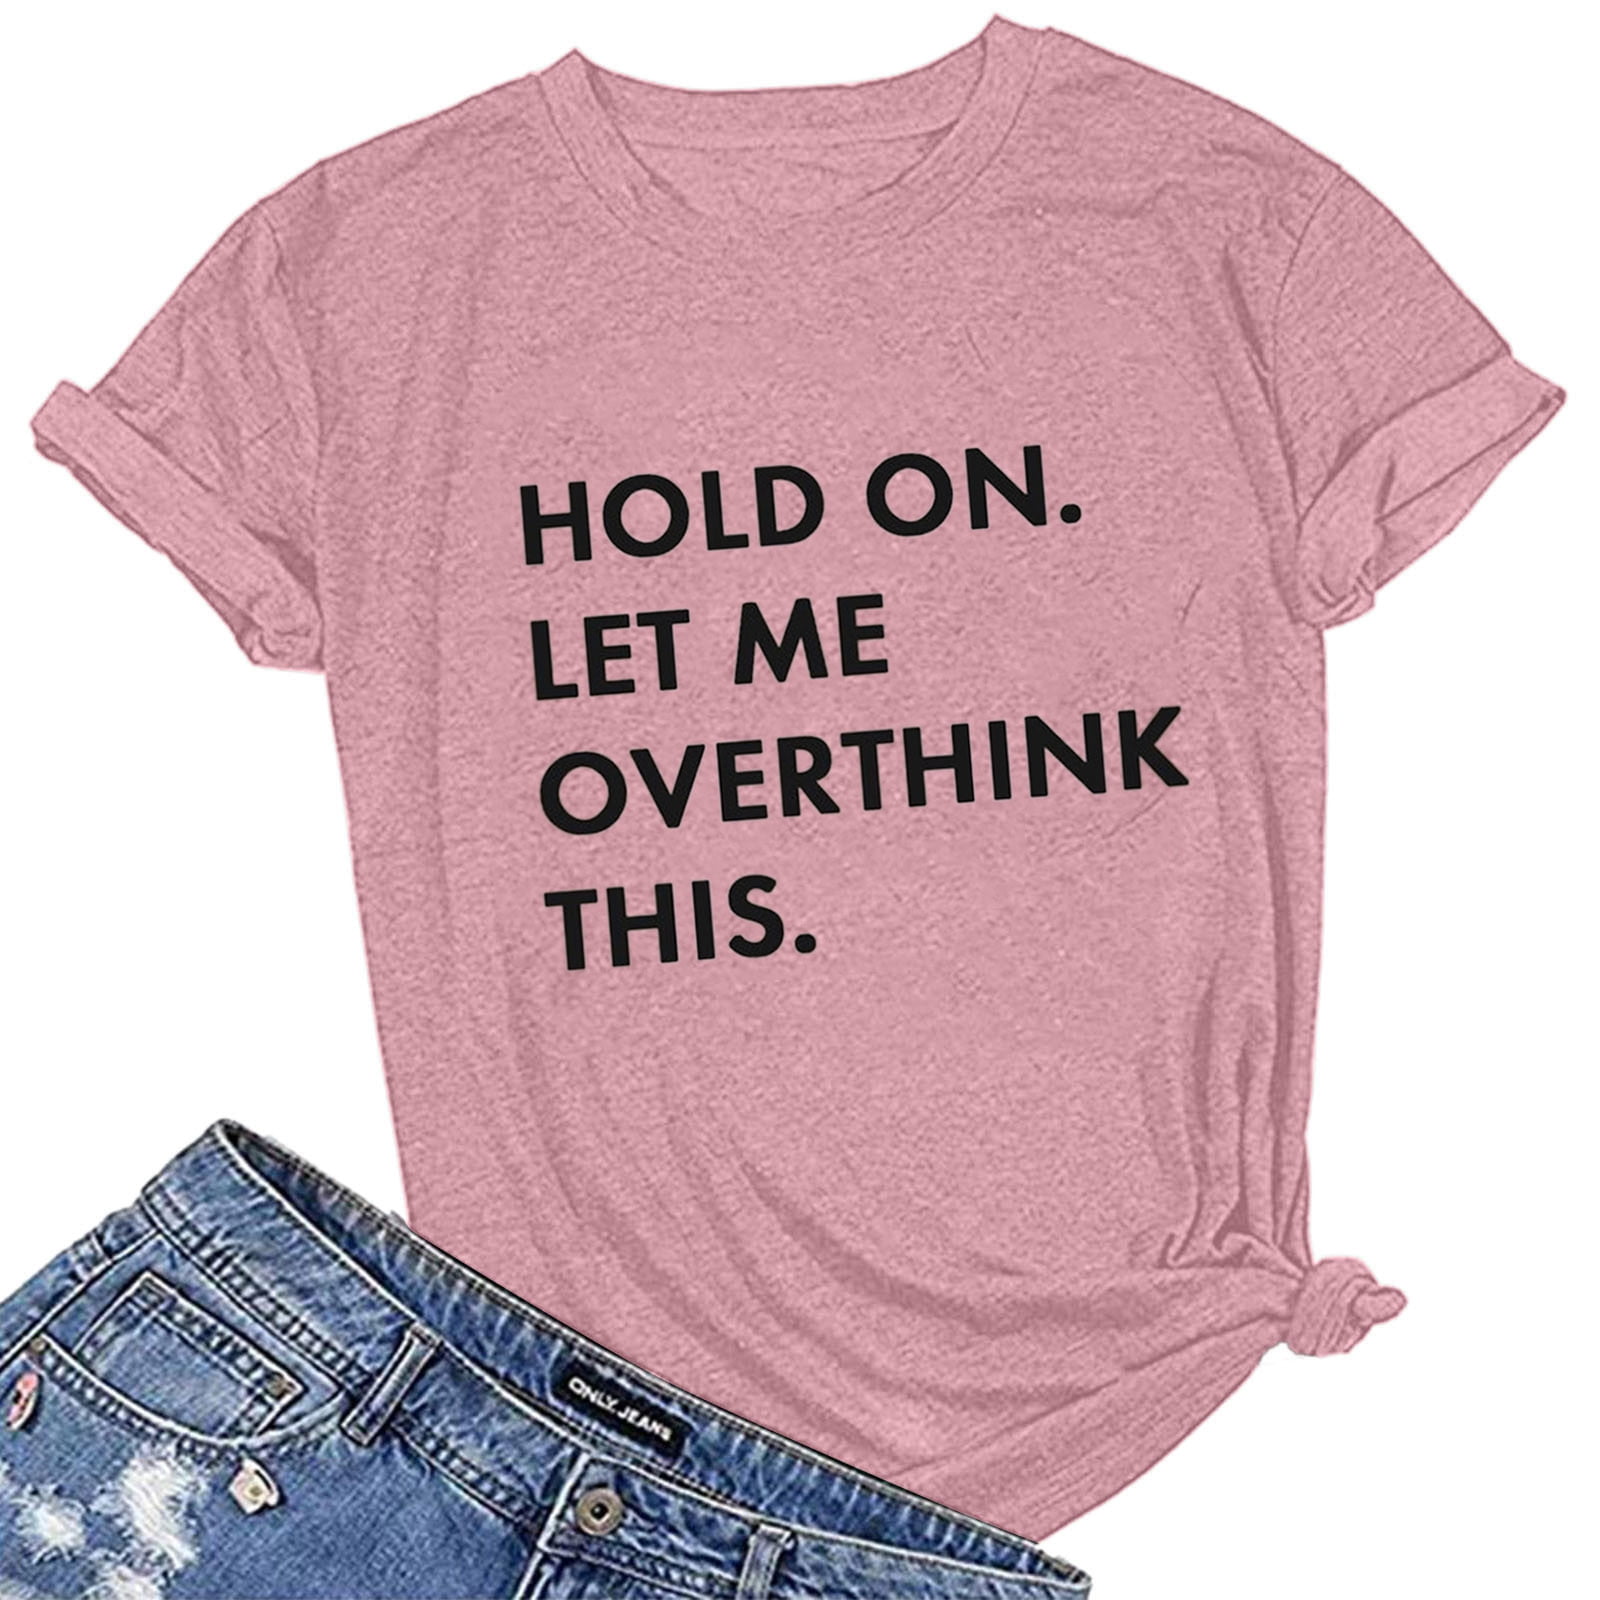 Fashion Shirts V-Neck Shirts Hollister V-Neck Shirt pink printed lettering casual look 